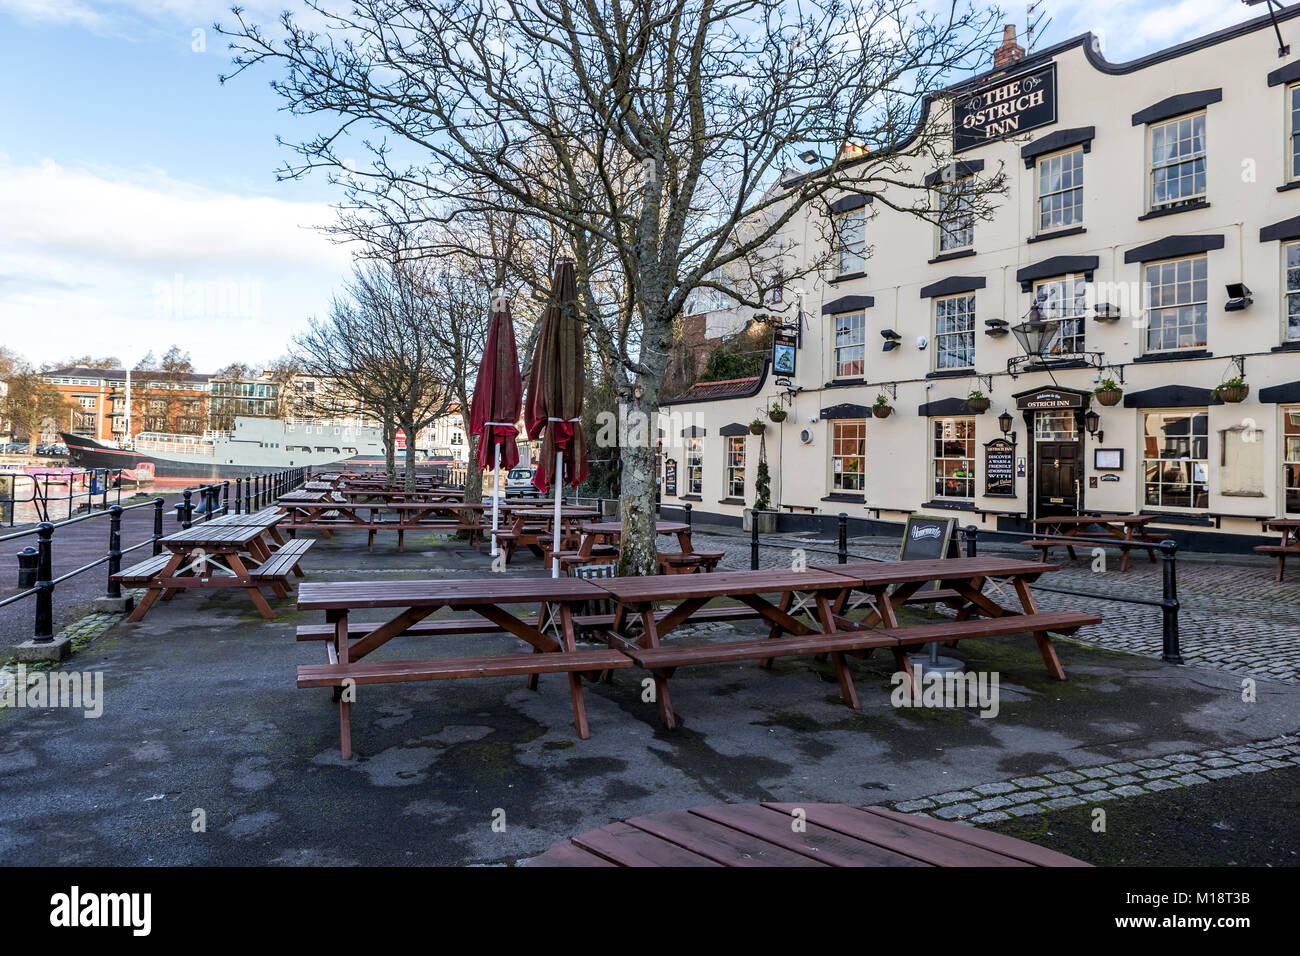 The Ostrich harbourside pub, Bristol, UK. Stock Photo